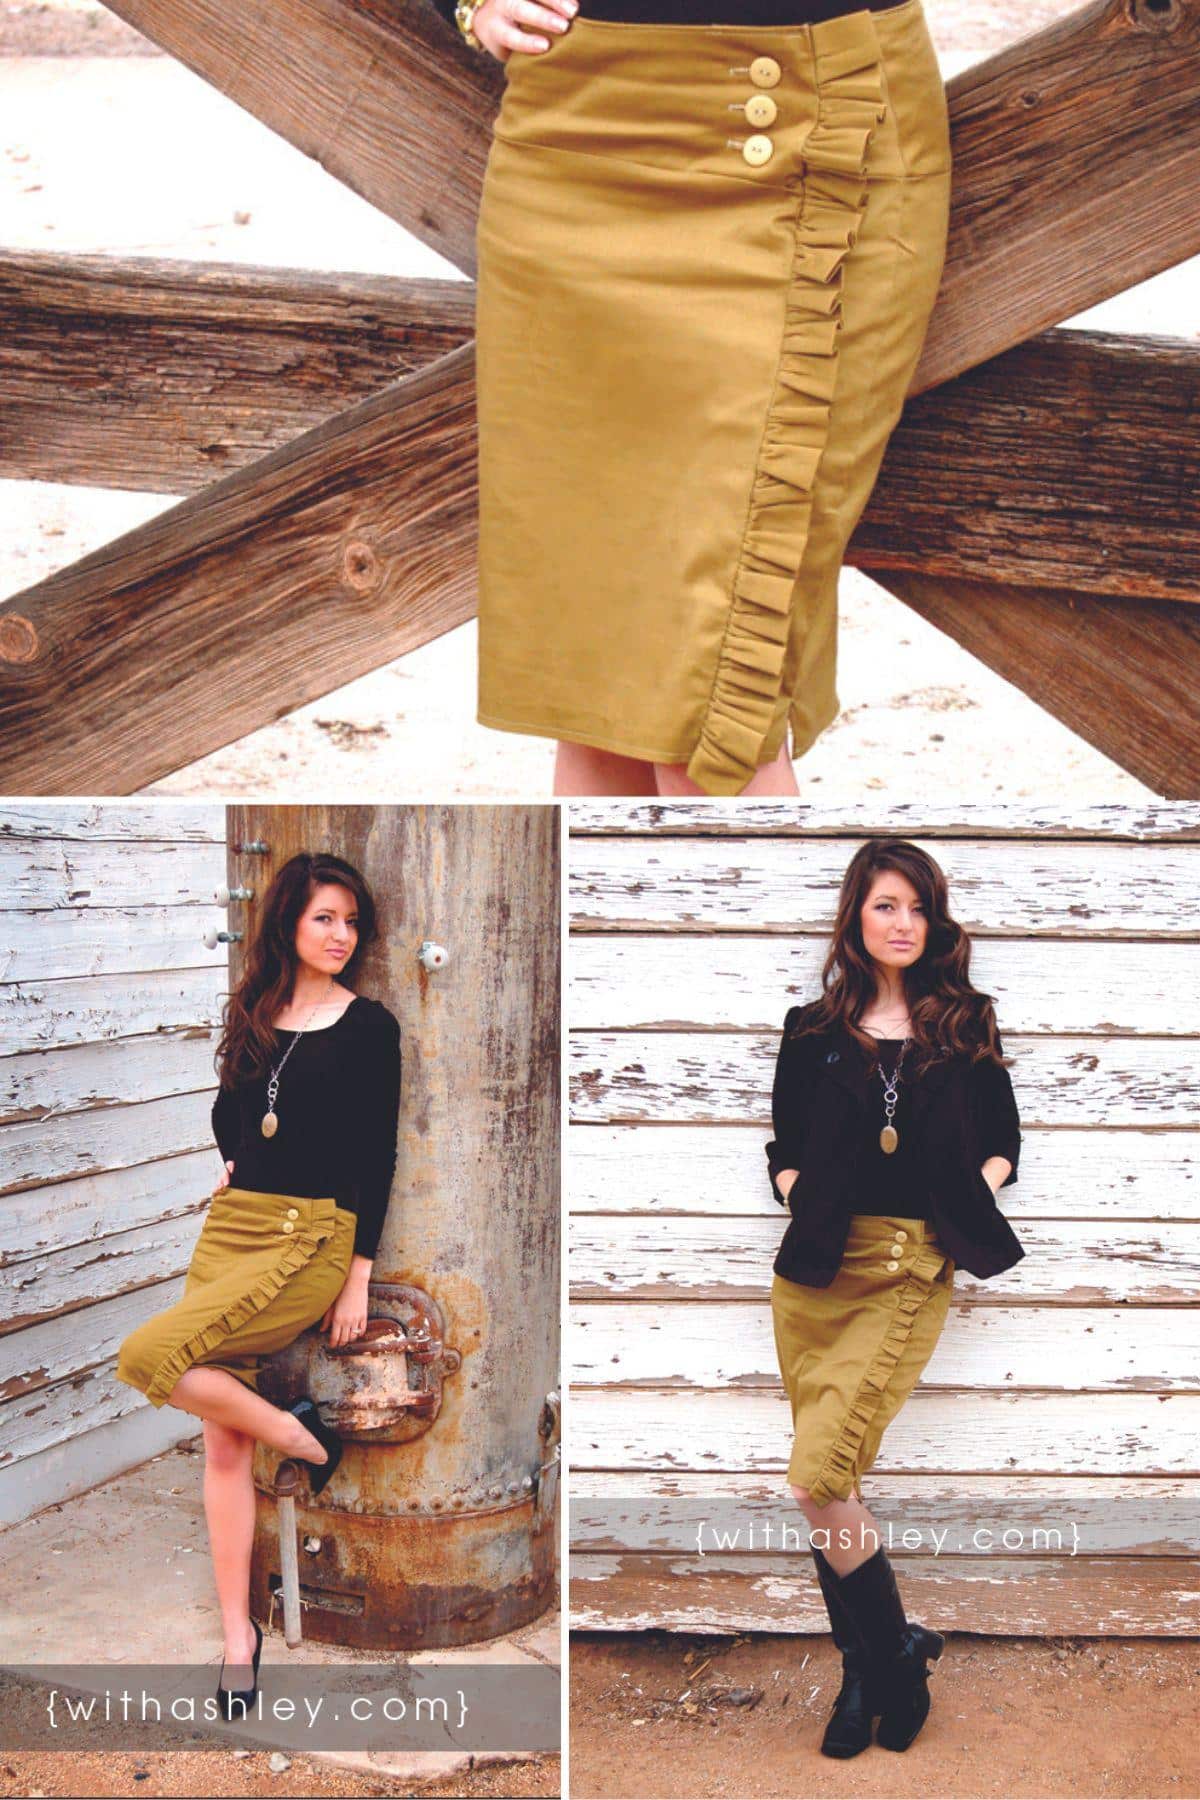 The Alligator Skirt collage.